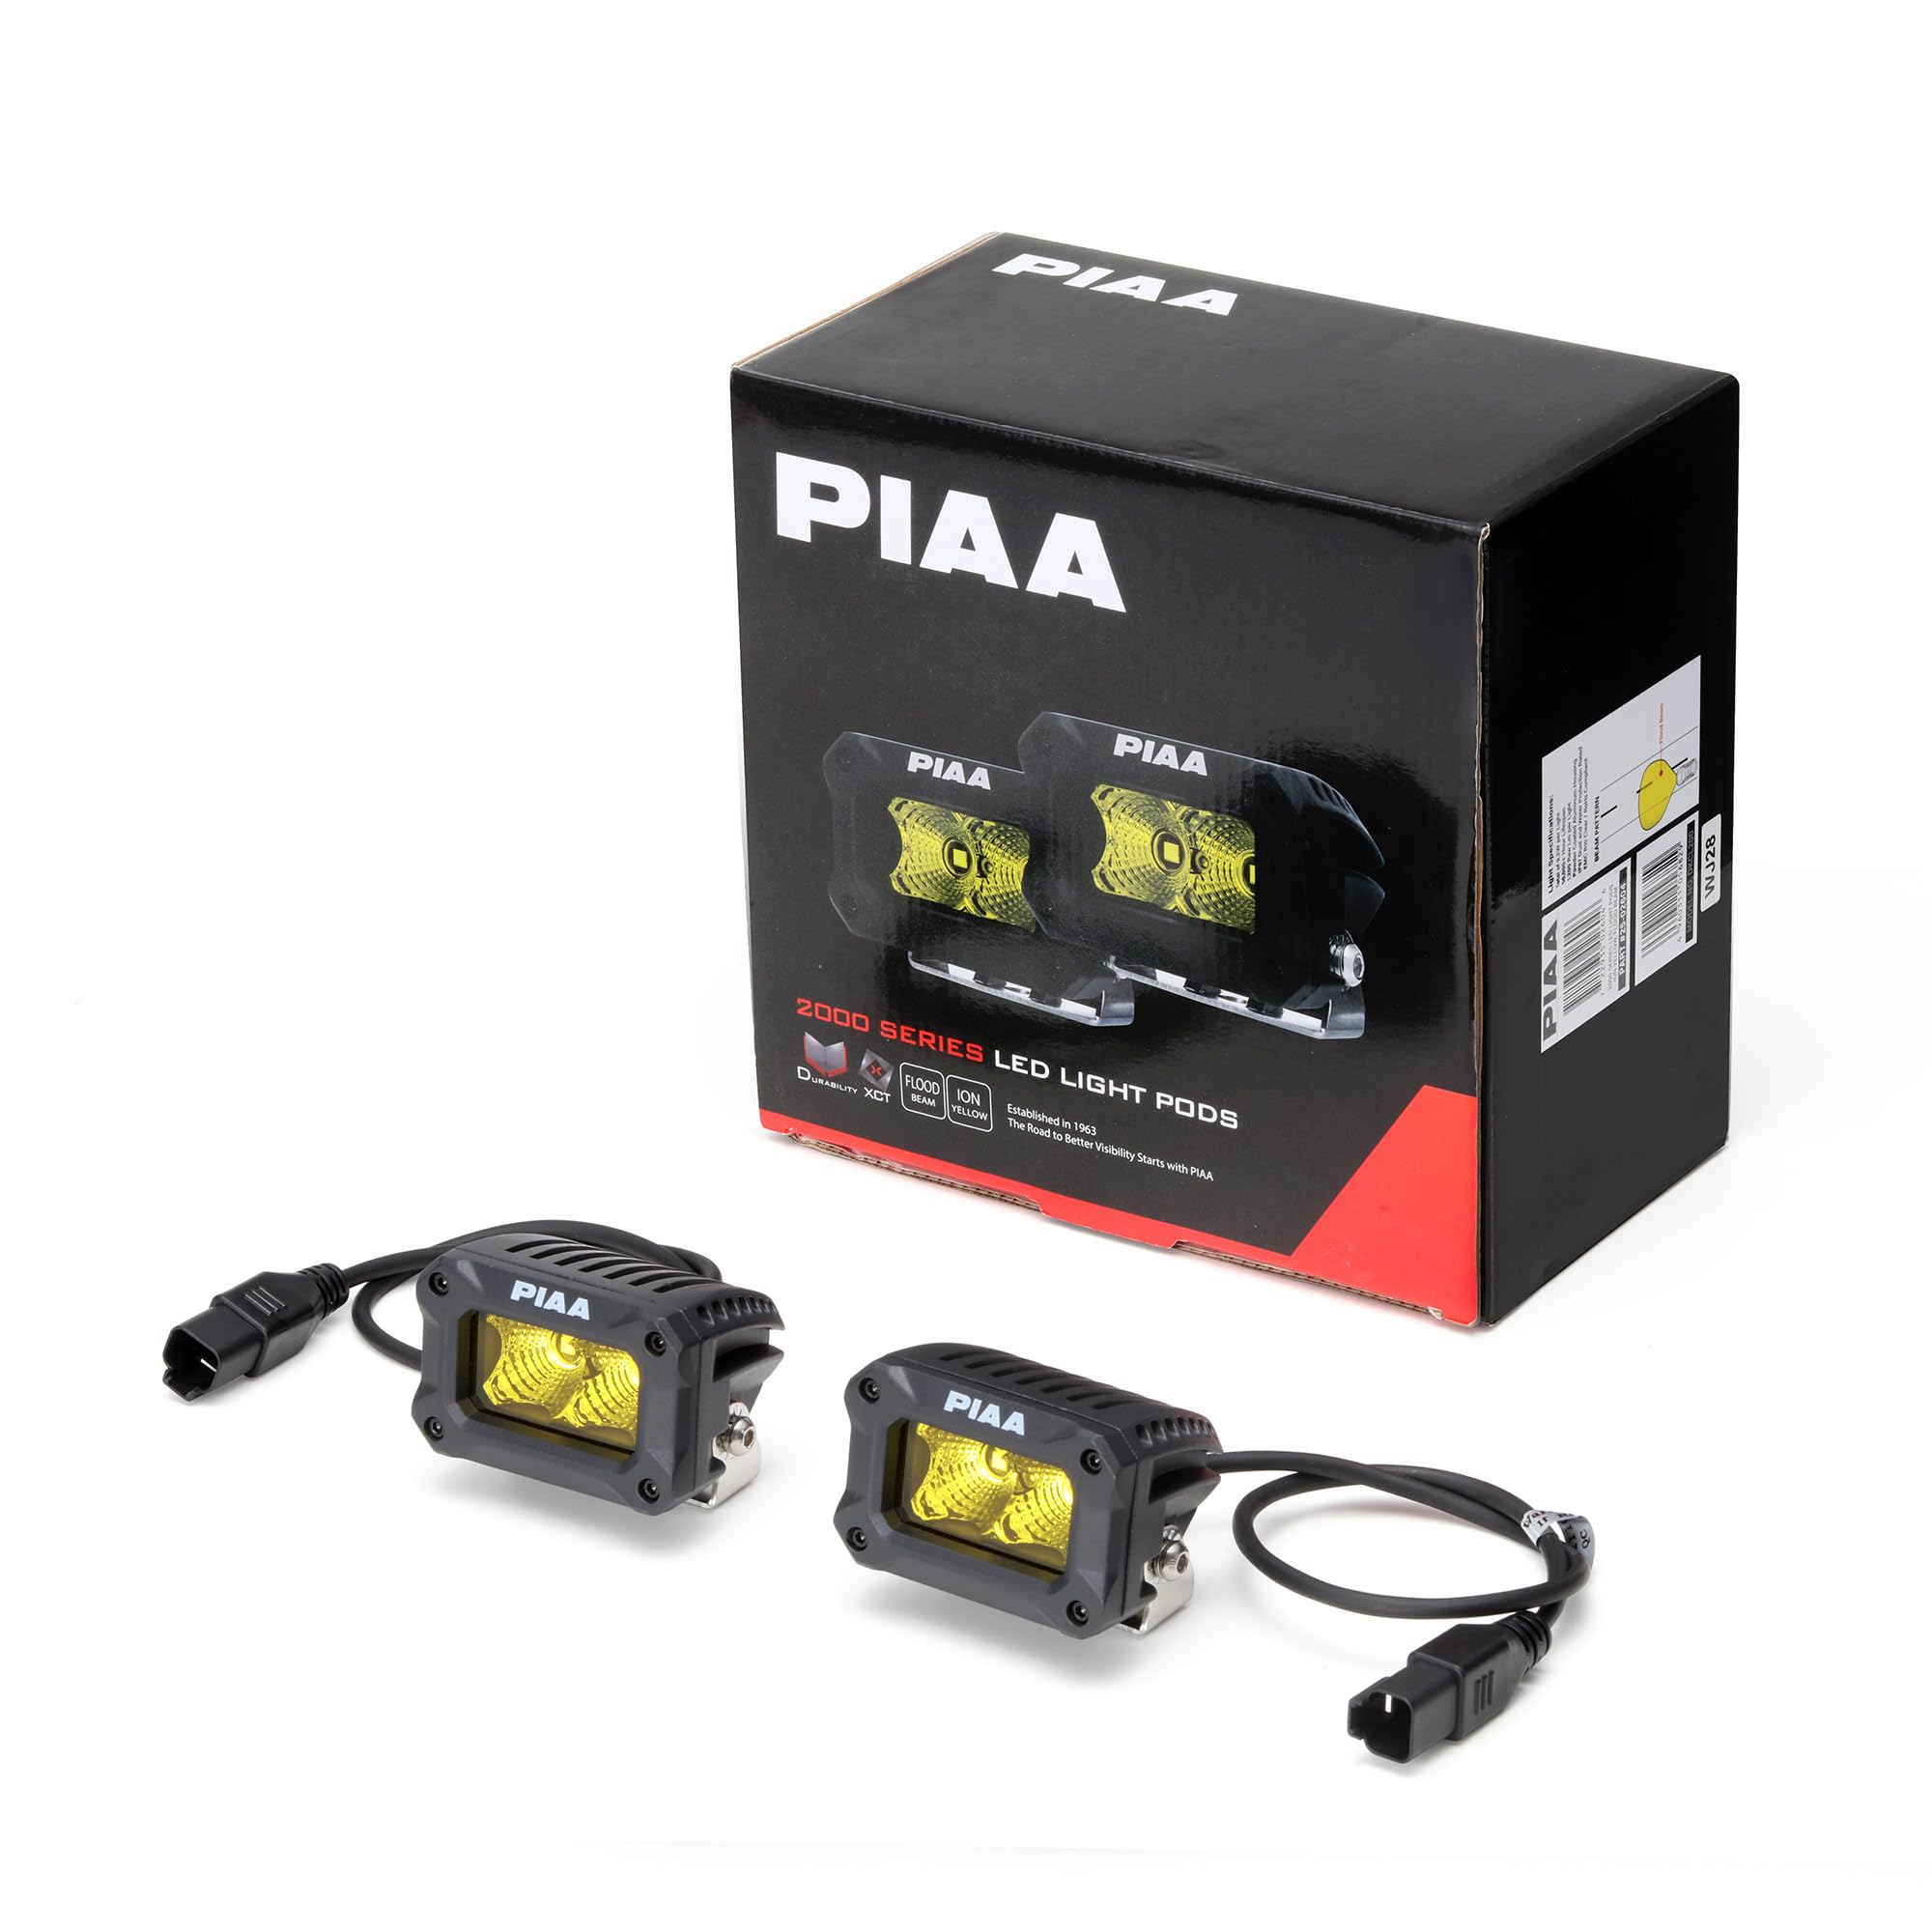 PIAA 後付けランプ LED イオンイエロー 2000LIGHT PODS FLOOD配光 12V/9.2W IPX7対応 2個入 DKCL200